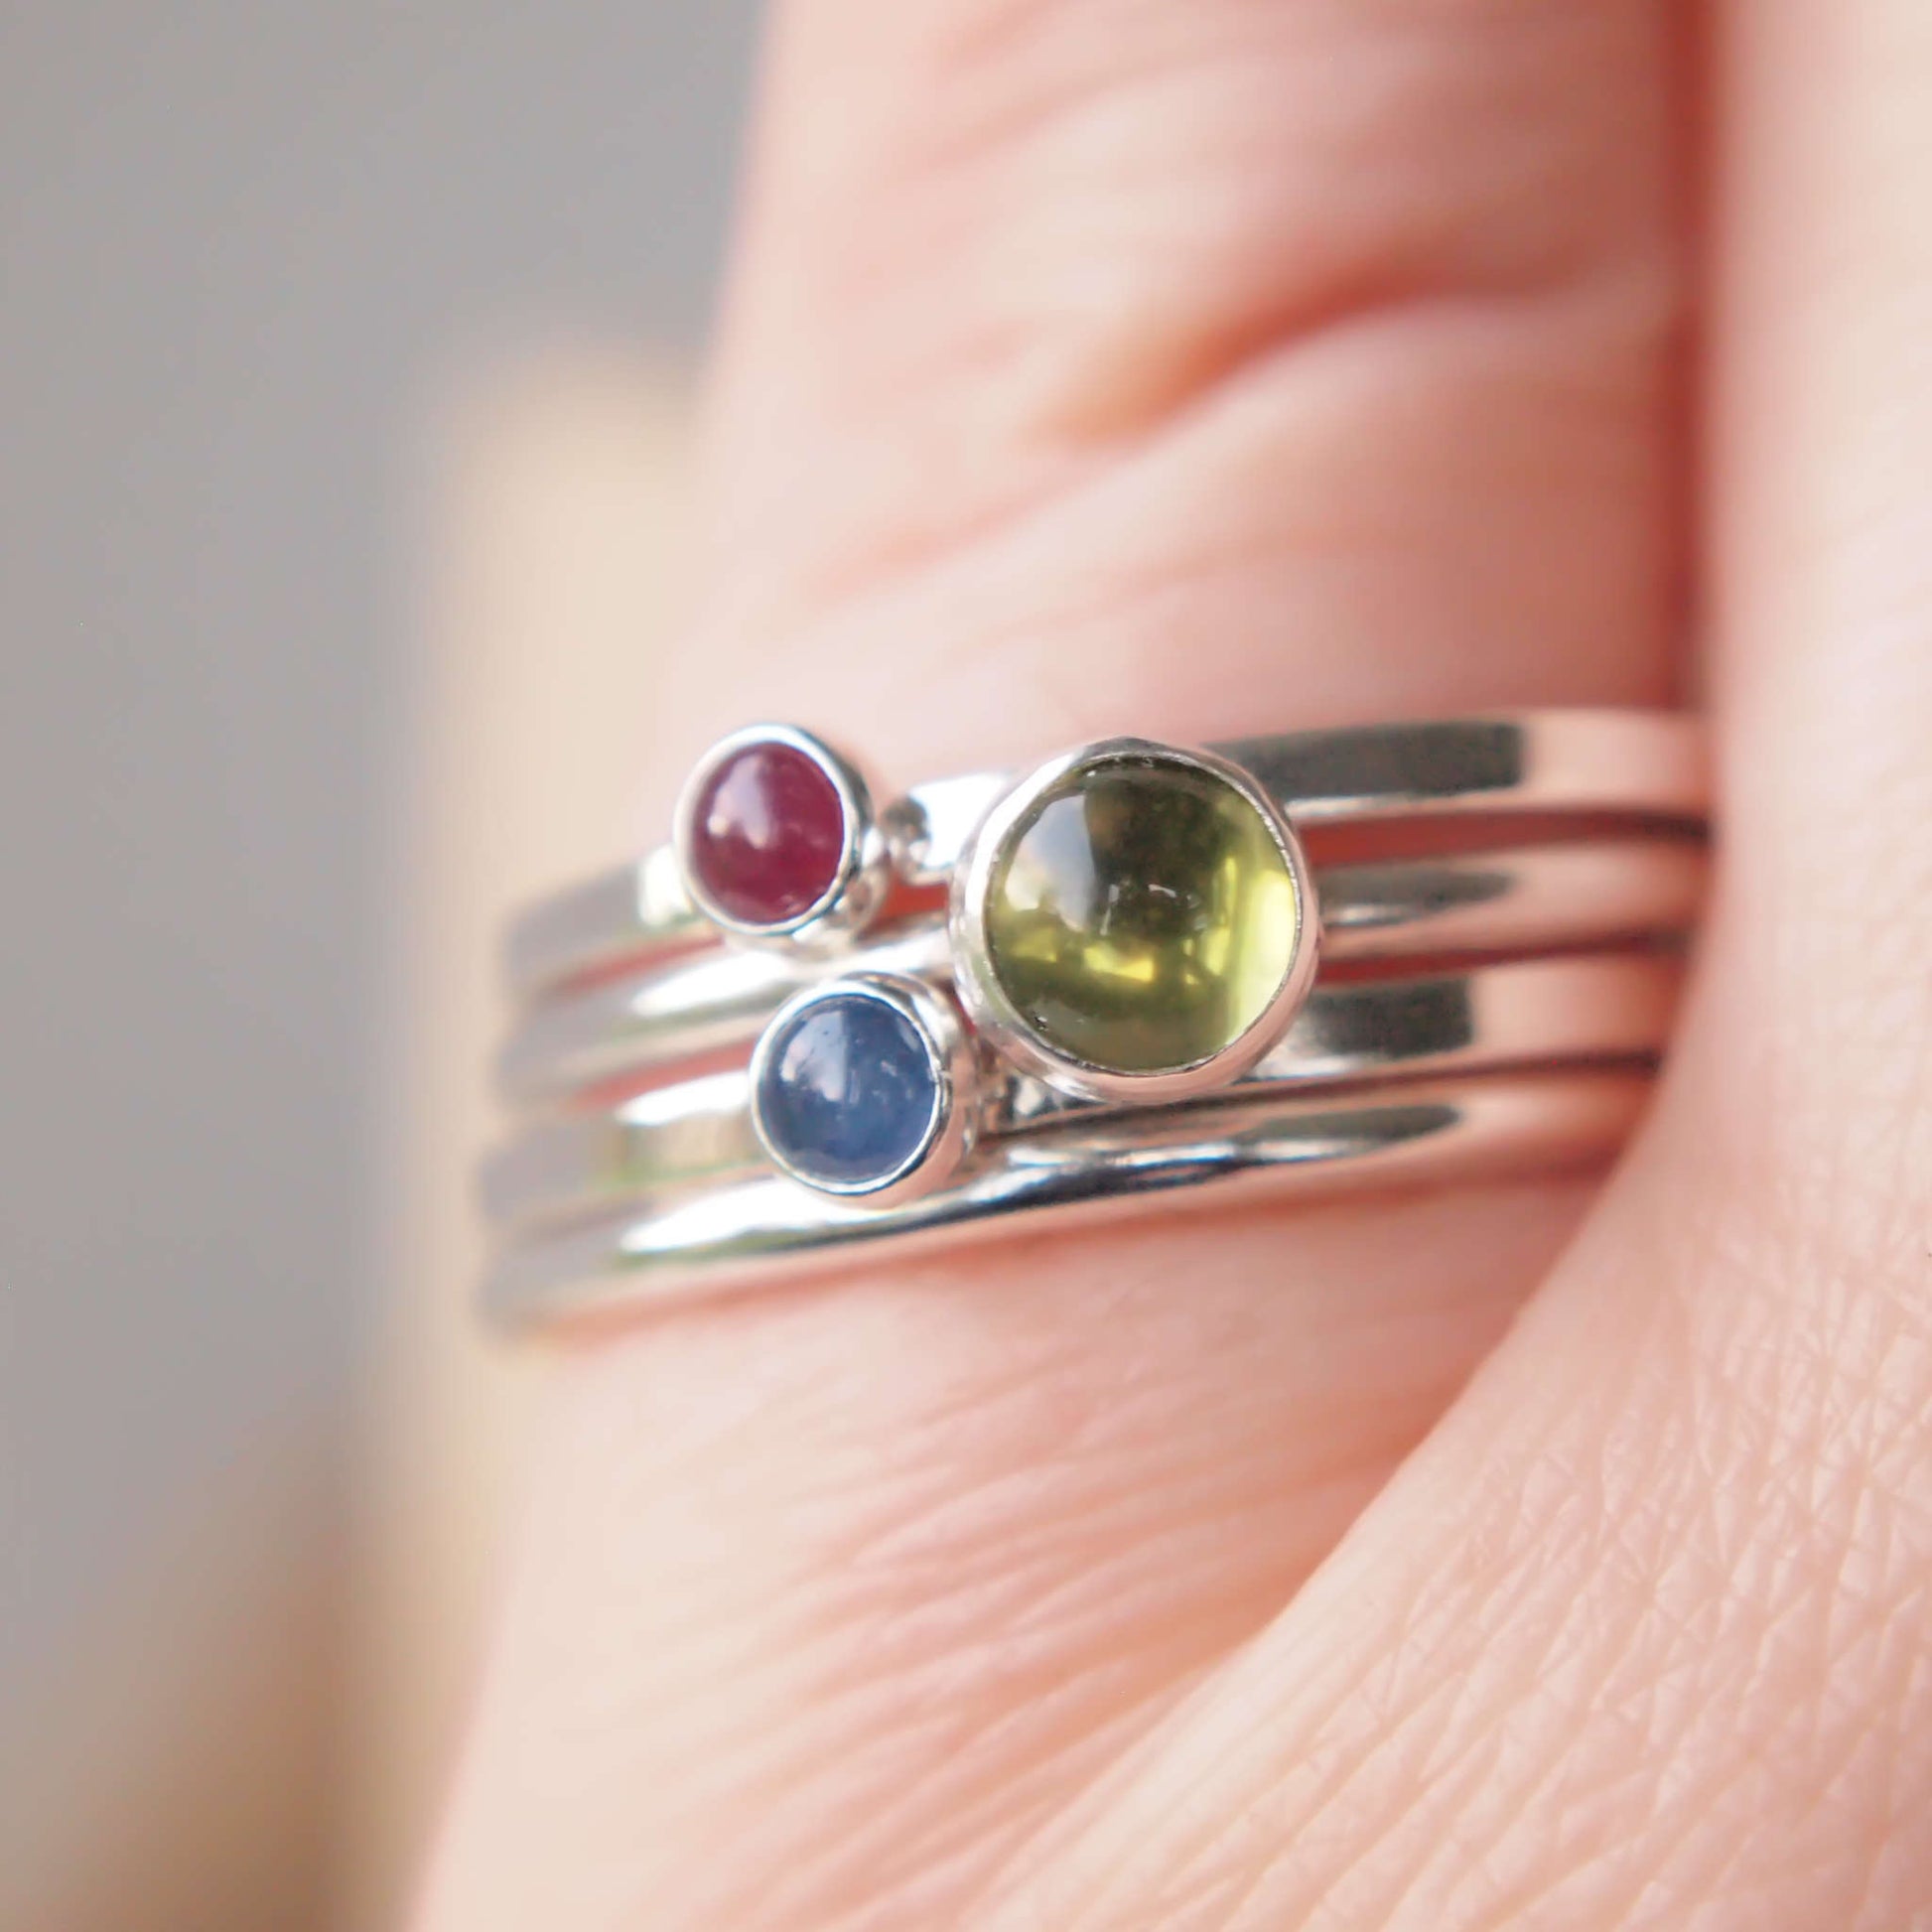 Three Solitaire Ring set with Peridot, ruby and sapphire gemstones. Handmade by maram jewellery in UK